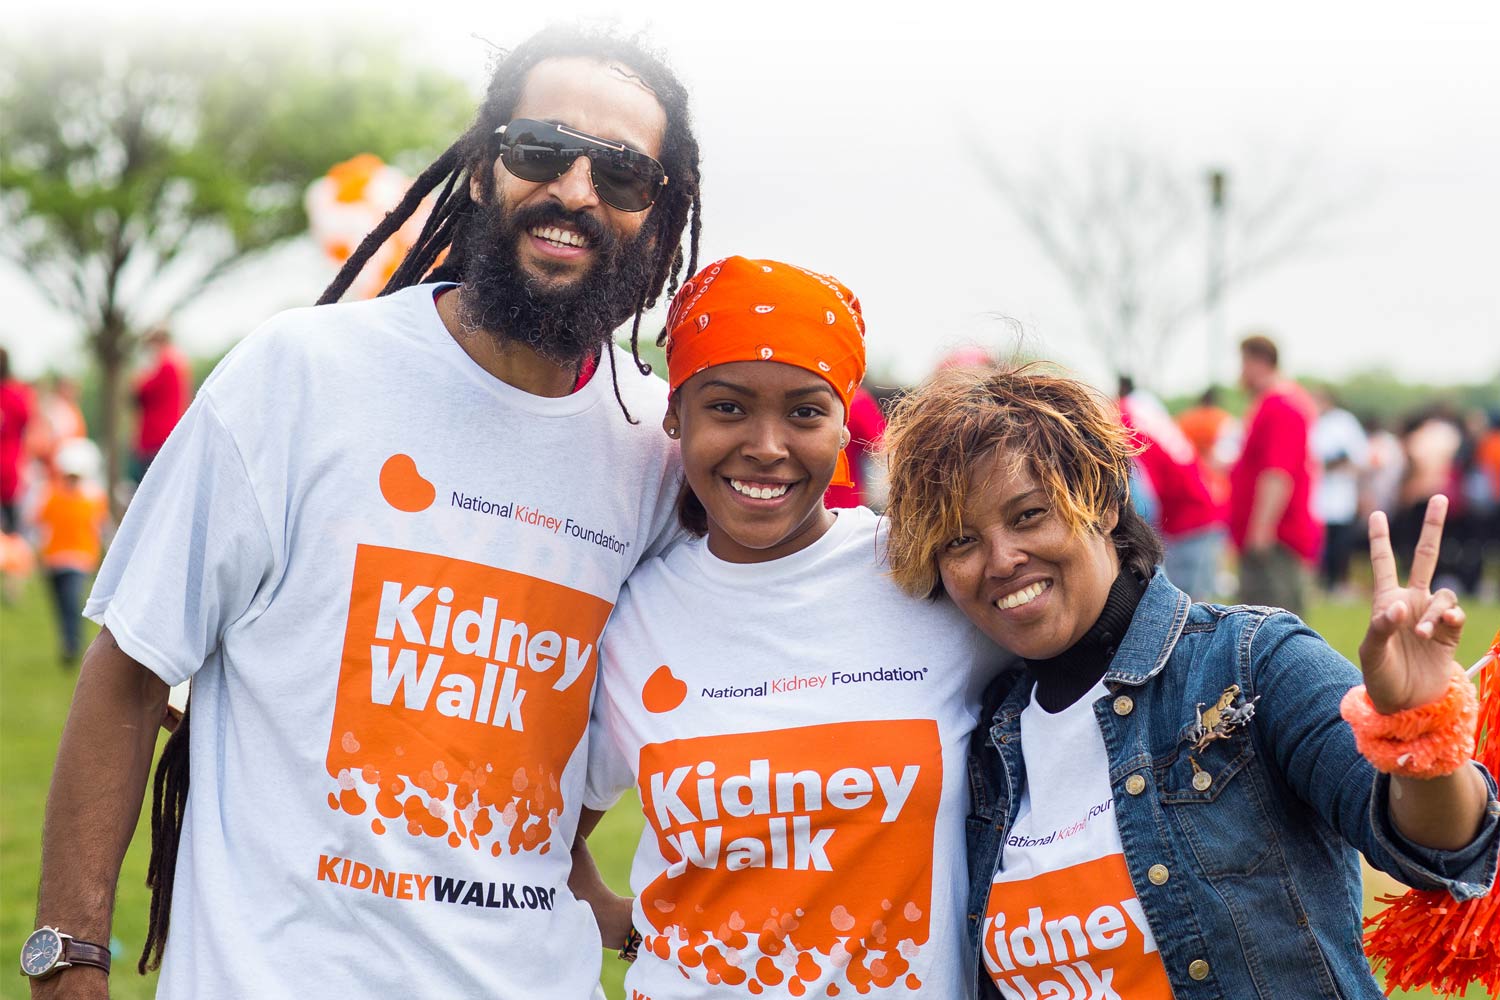 Three Kidney Walk participants smiling at a Walk event